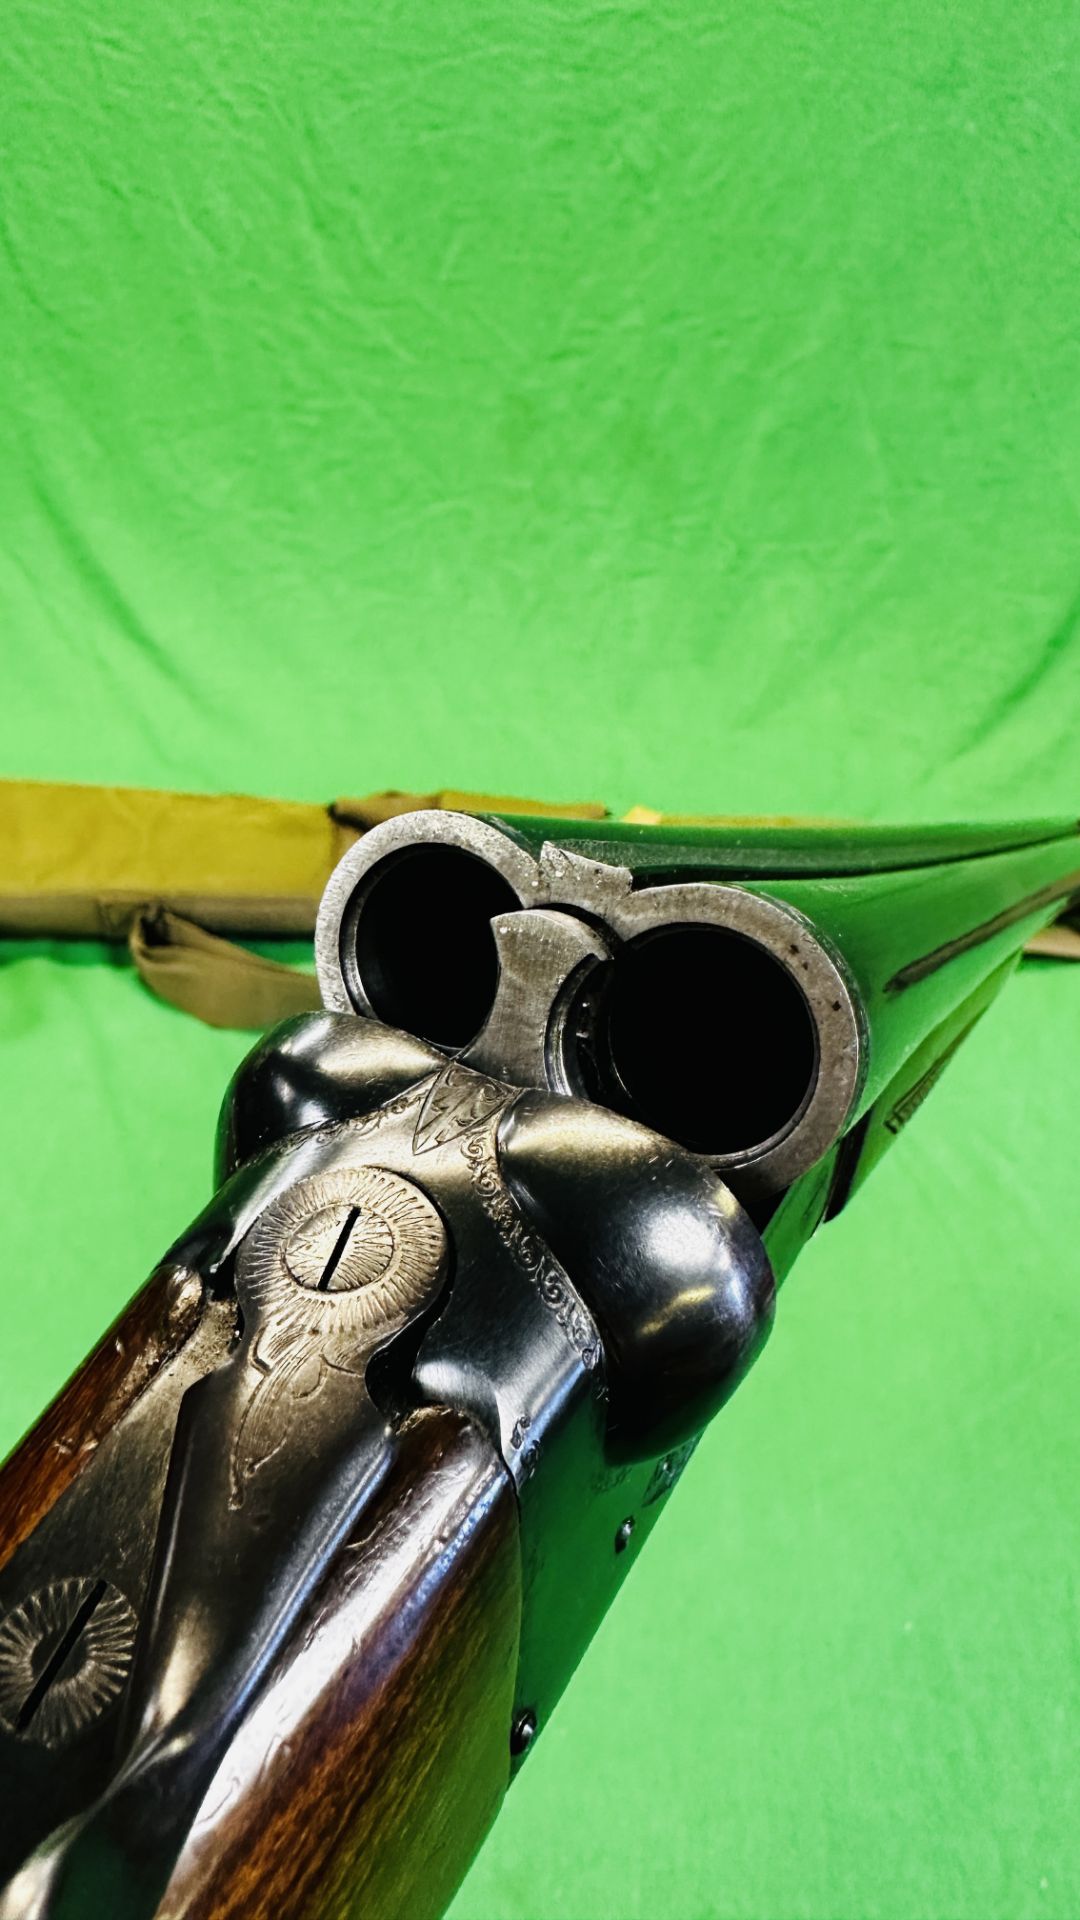 ZABALA 12 GAUGE SIDE BY SIDE SHOTGUN #192092 WITH GREEN PADDED GUN SLEEVE - (REF: 1452) - (ALL GUNS - Bild 6 aus 16